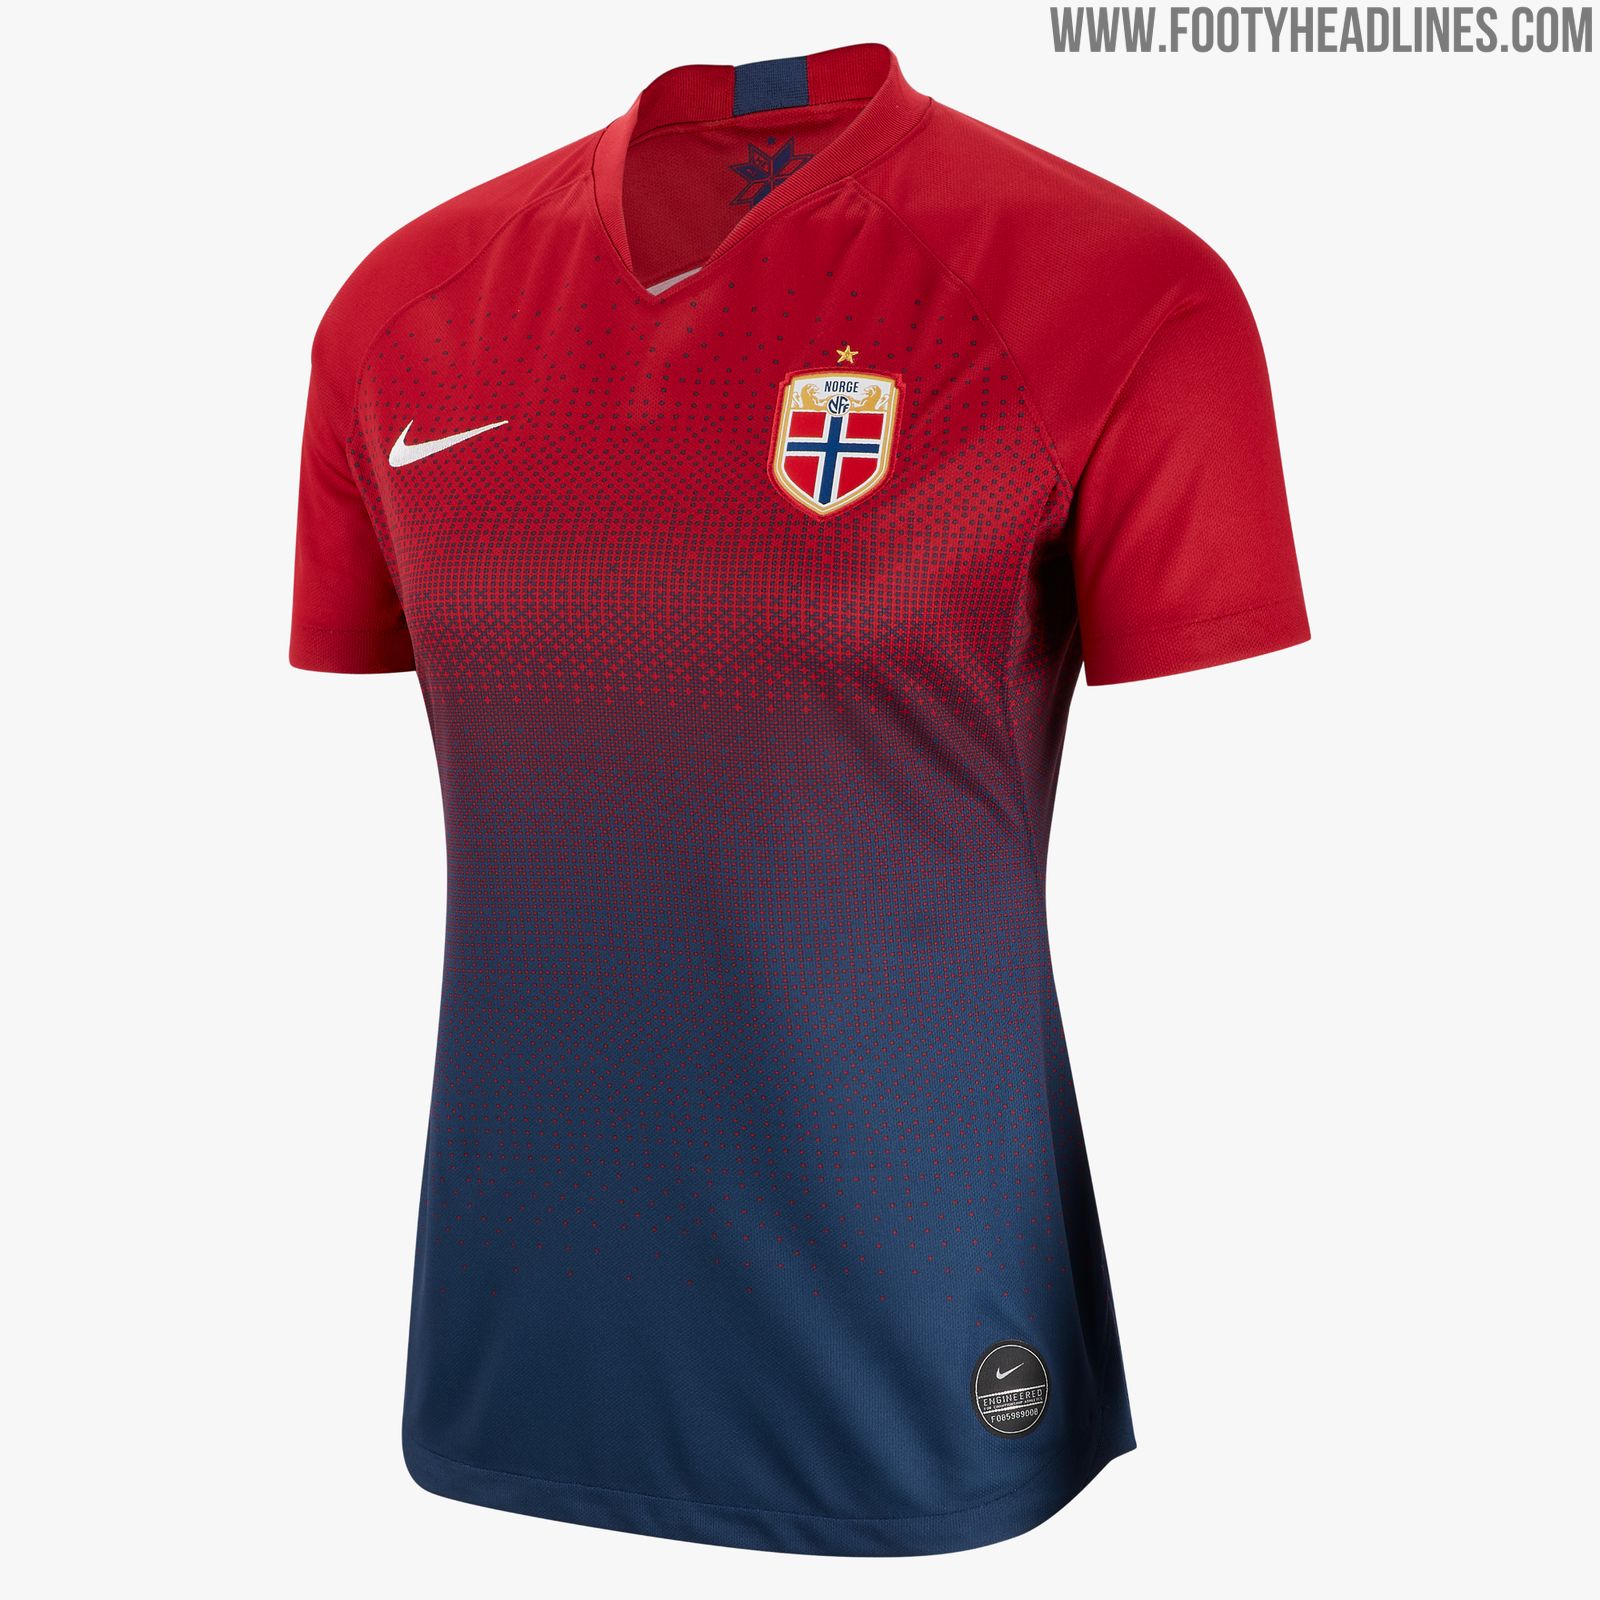 Circulo obvio revelación Nike Norway 2019 Women's World Cup Home Kit Revealed - Footy Headlines